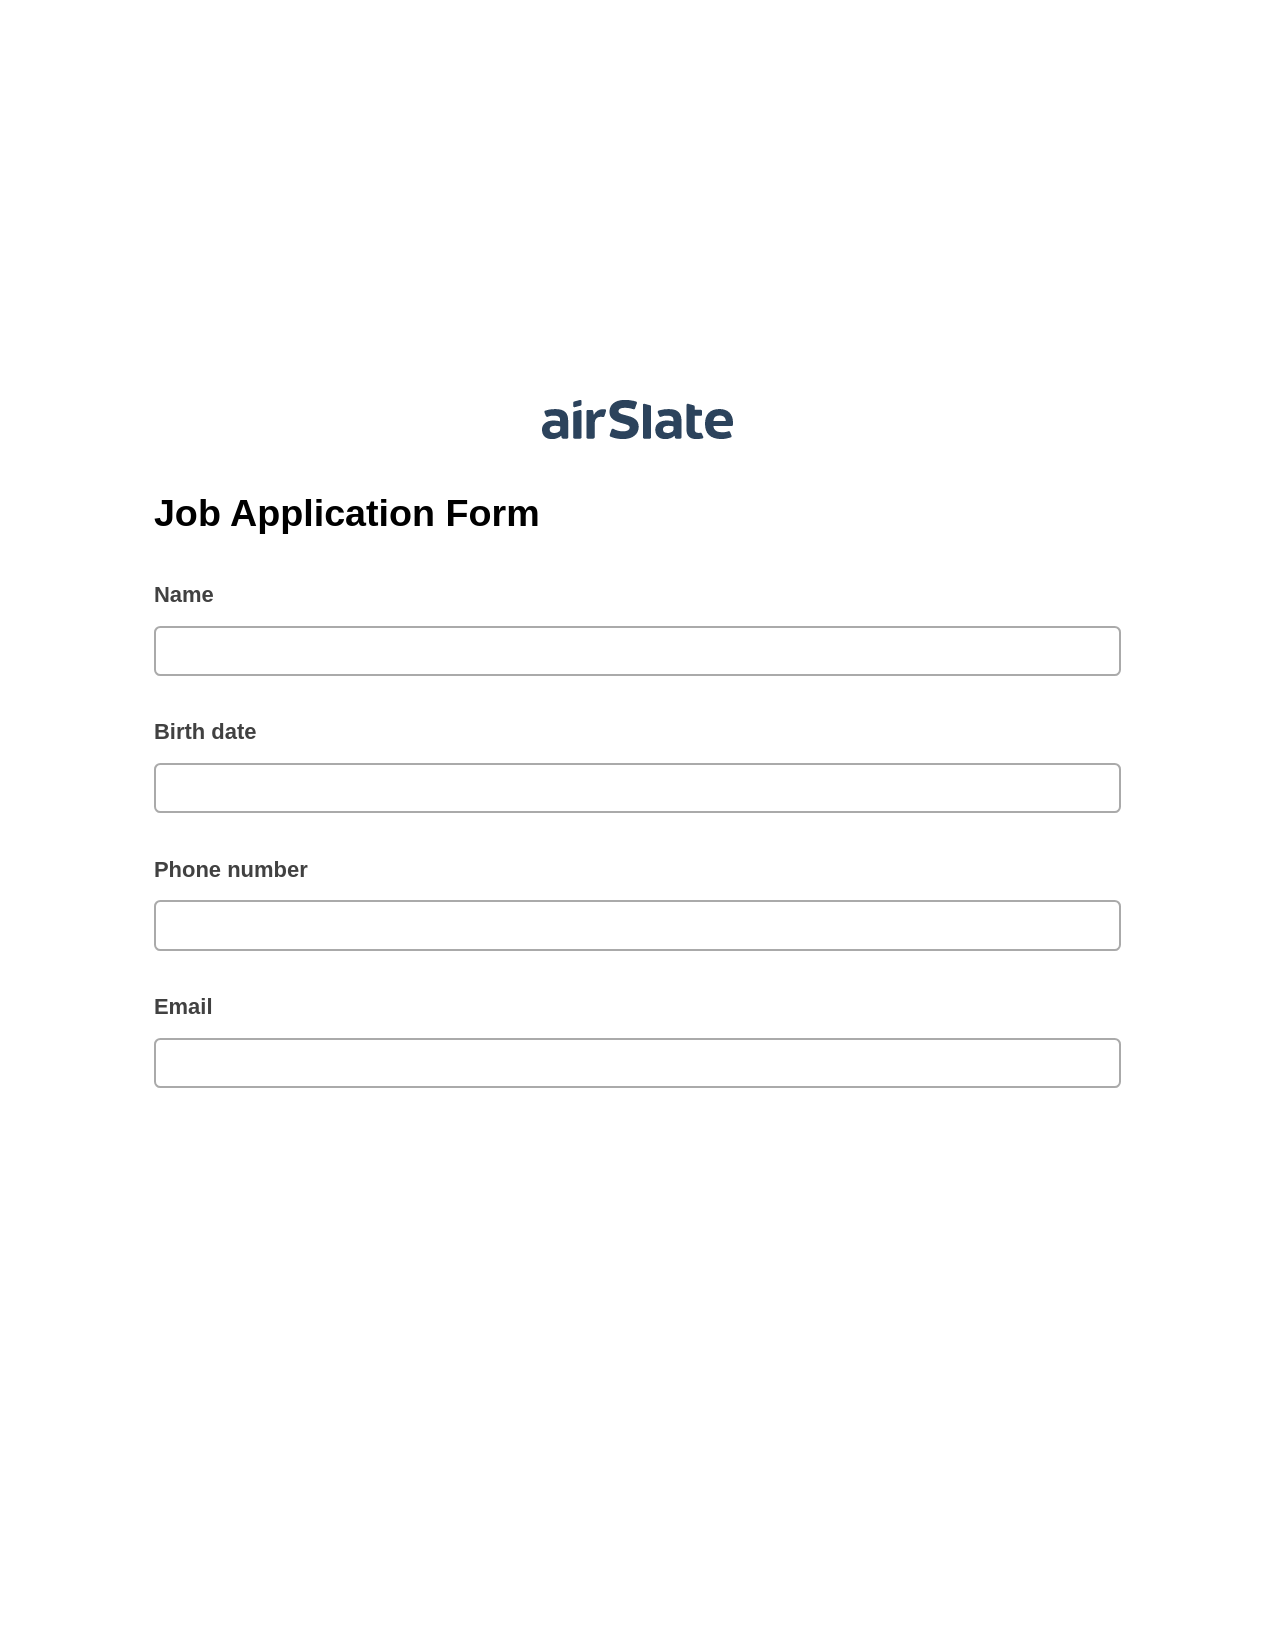 Multirole Job Application Form Pre-fill Slate from MS Dynamics 365 Records Bot, SendGrid send Campaign bot, OneDrive Bot